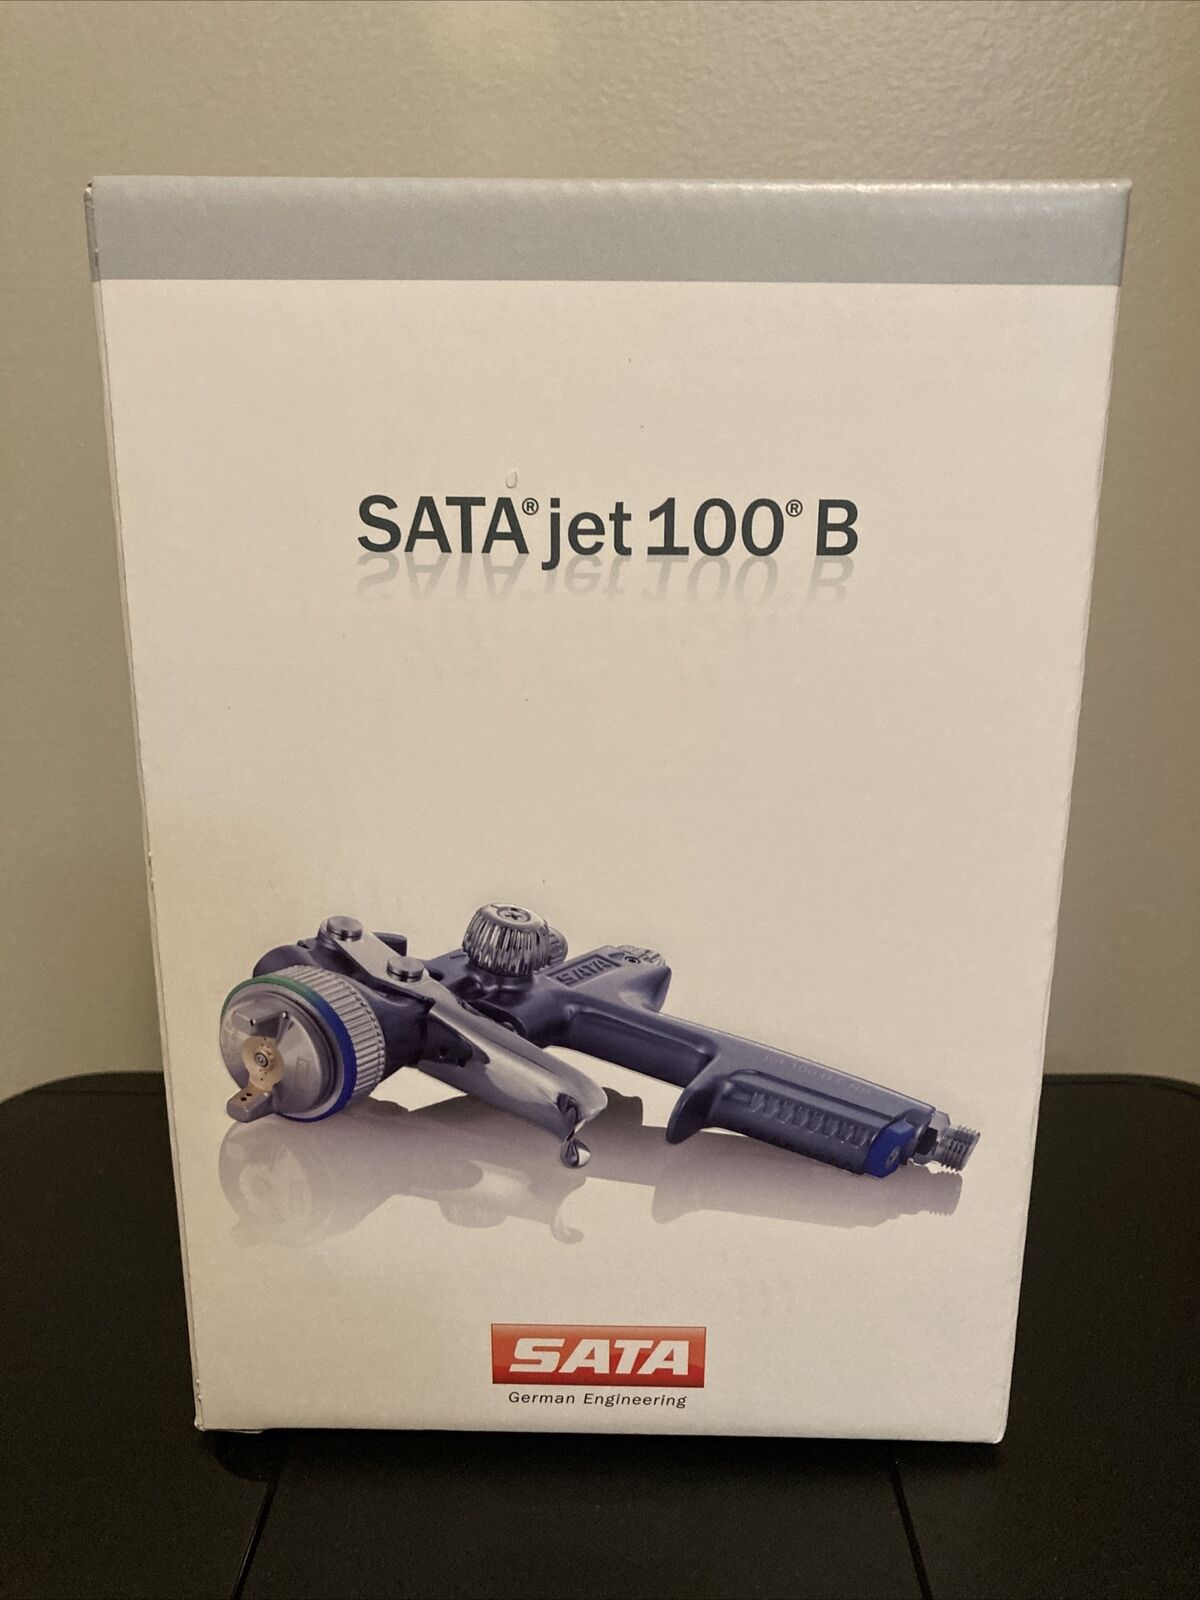 SATAjet 100 B F RP Topics on TV 1.6 Cup Daily bargain sale Gun Plastic Spray W